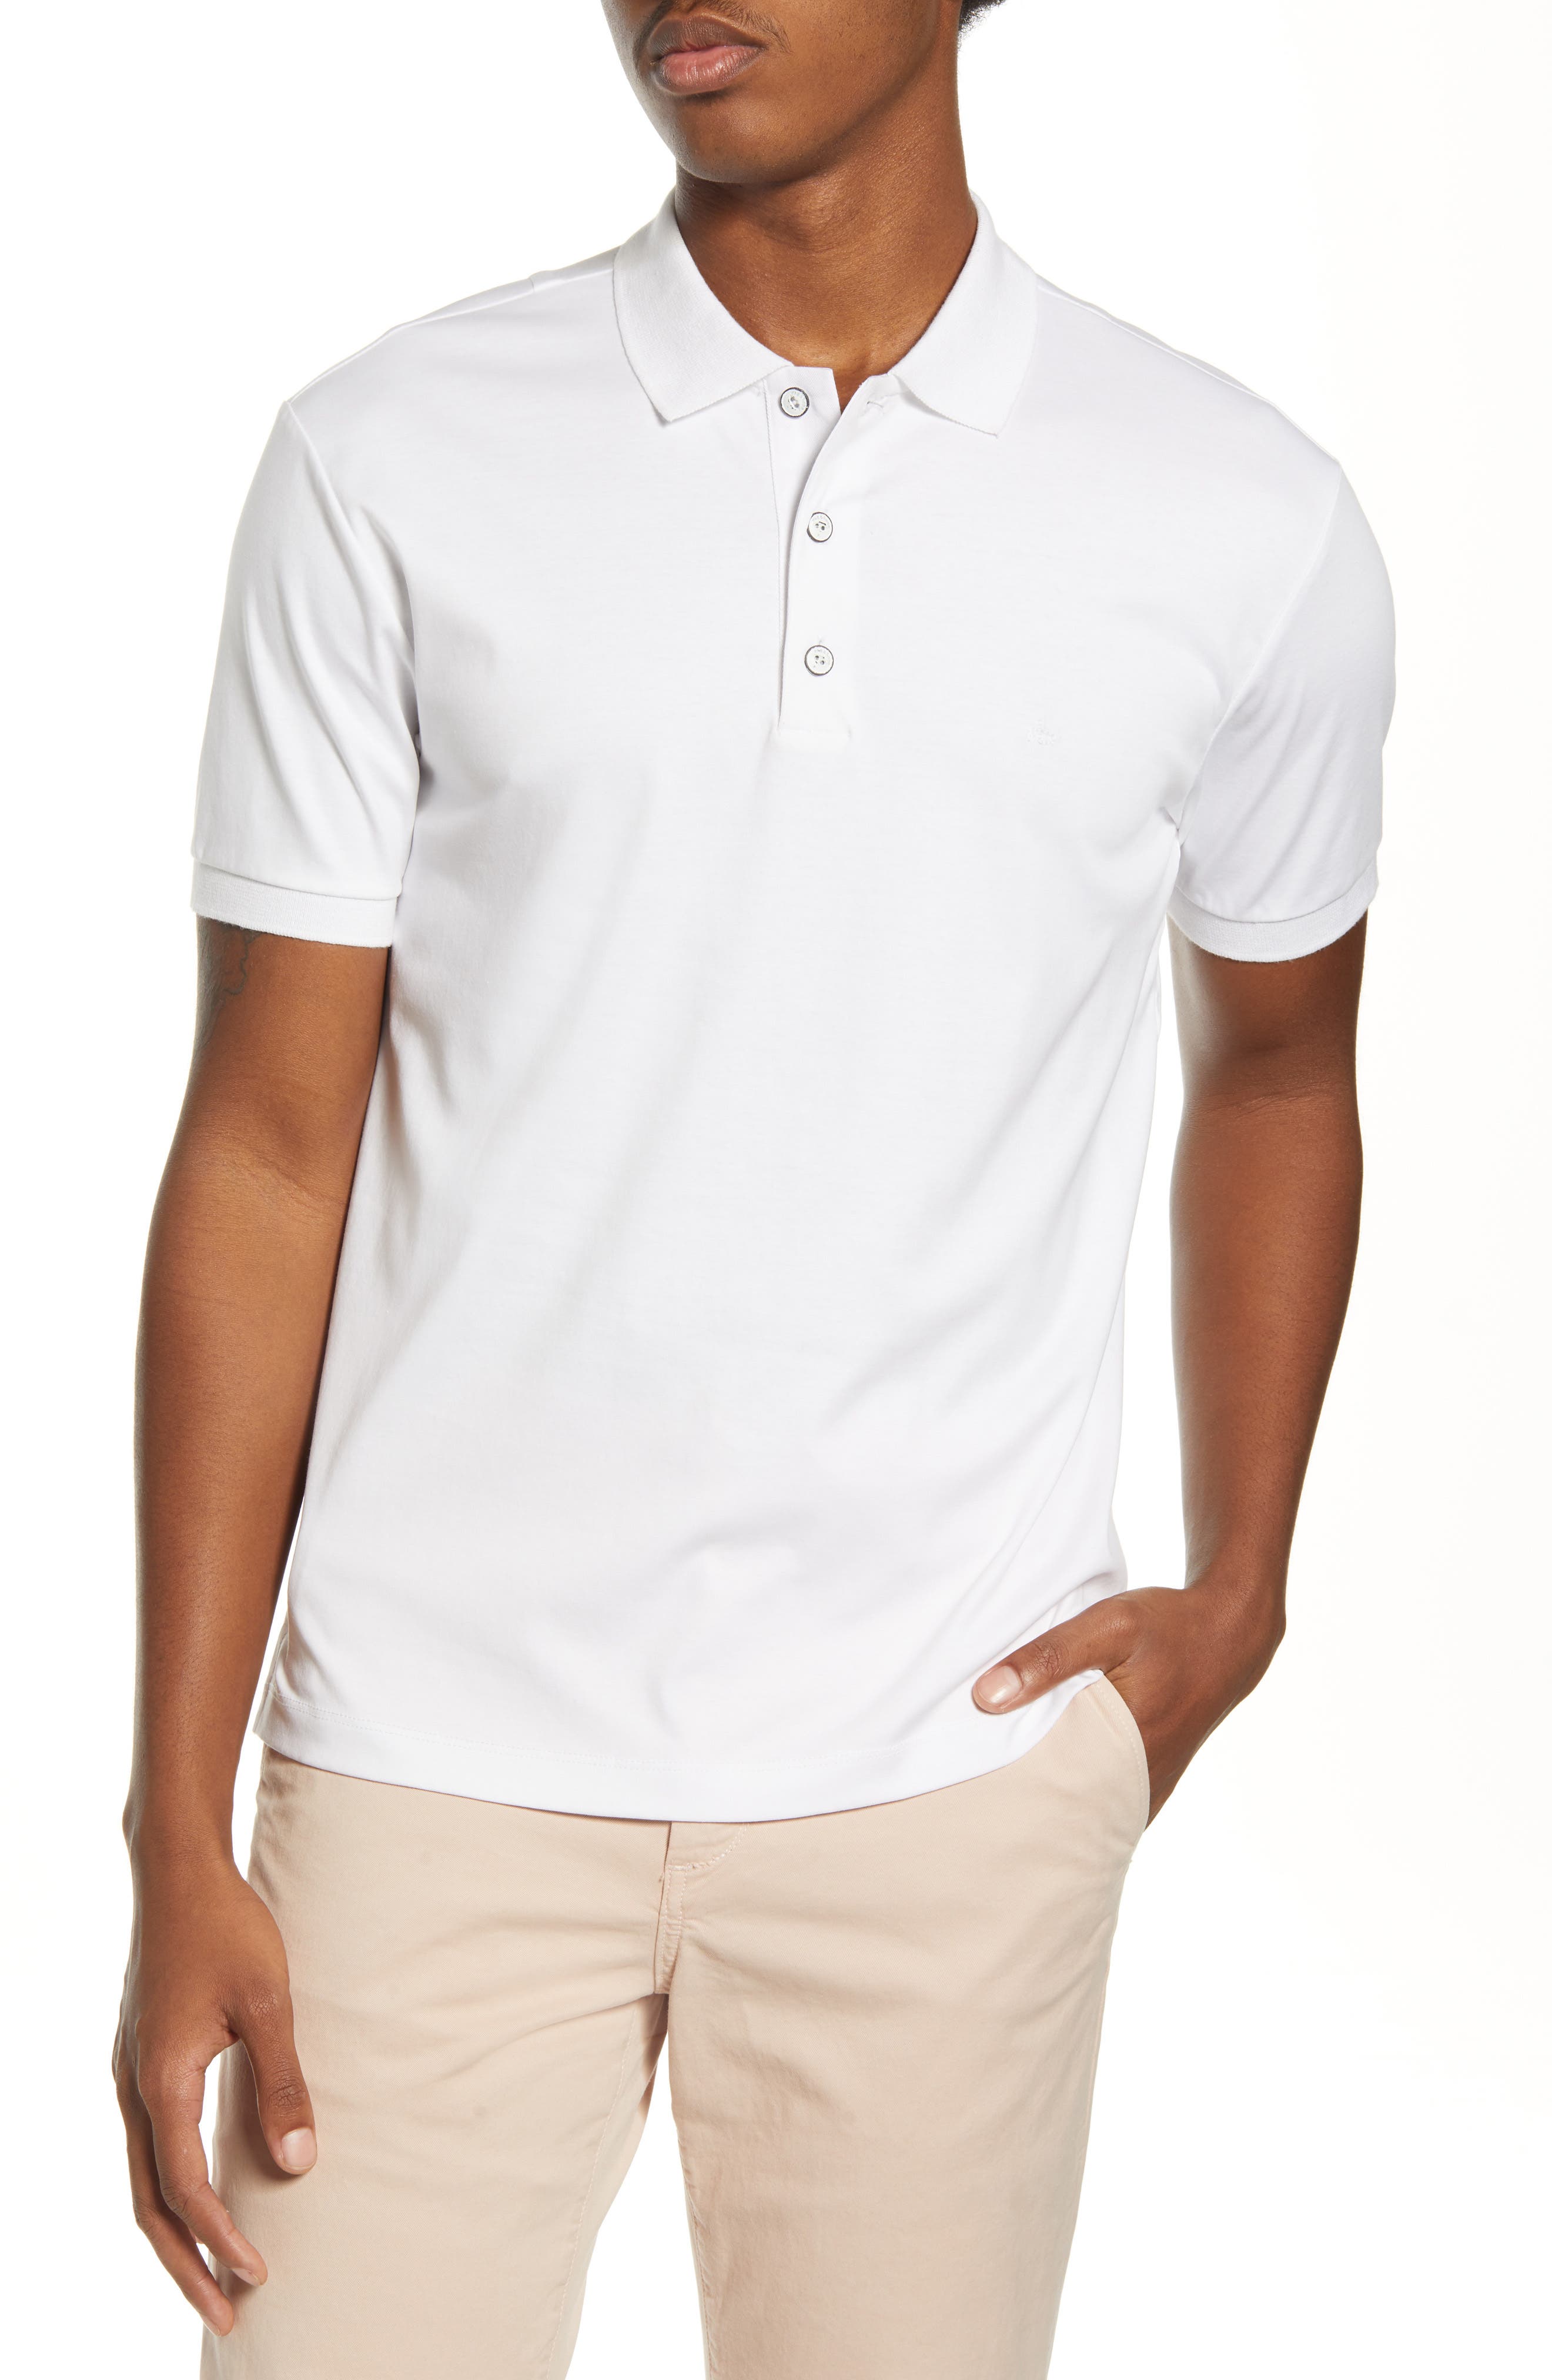 white polo shirt male